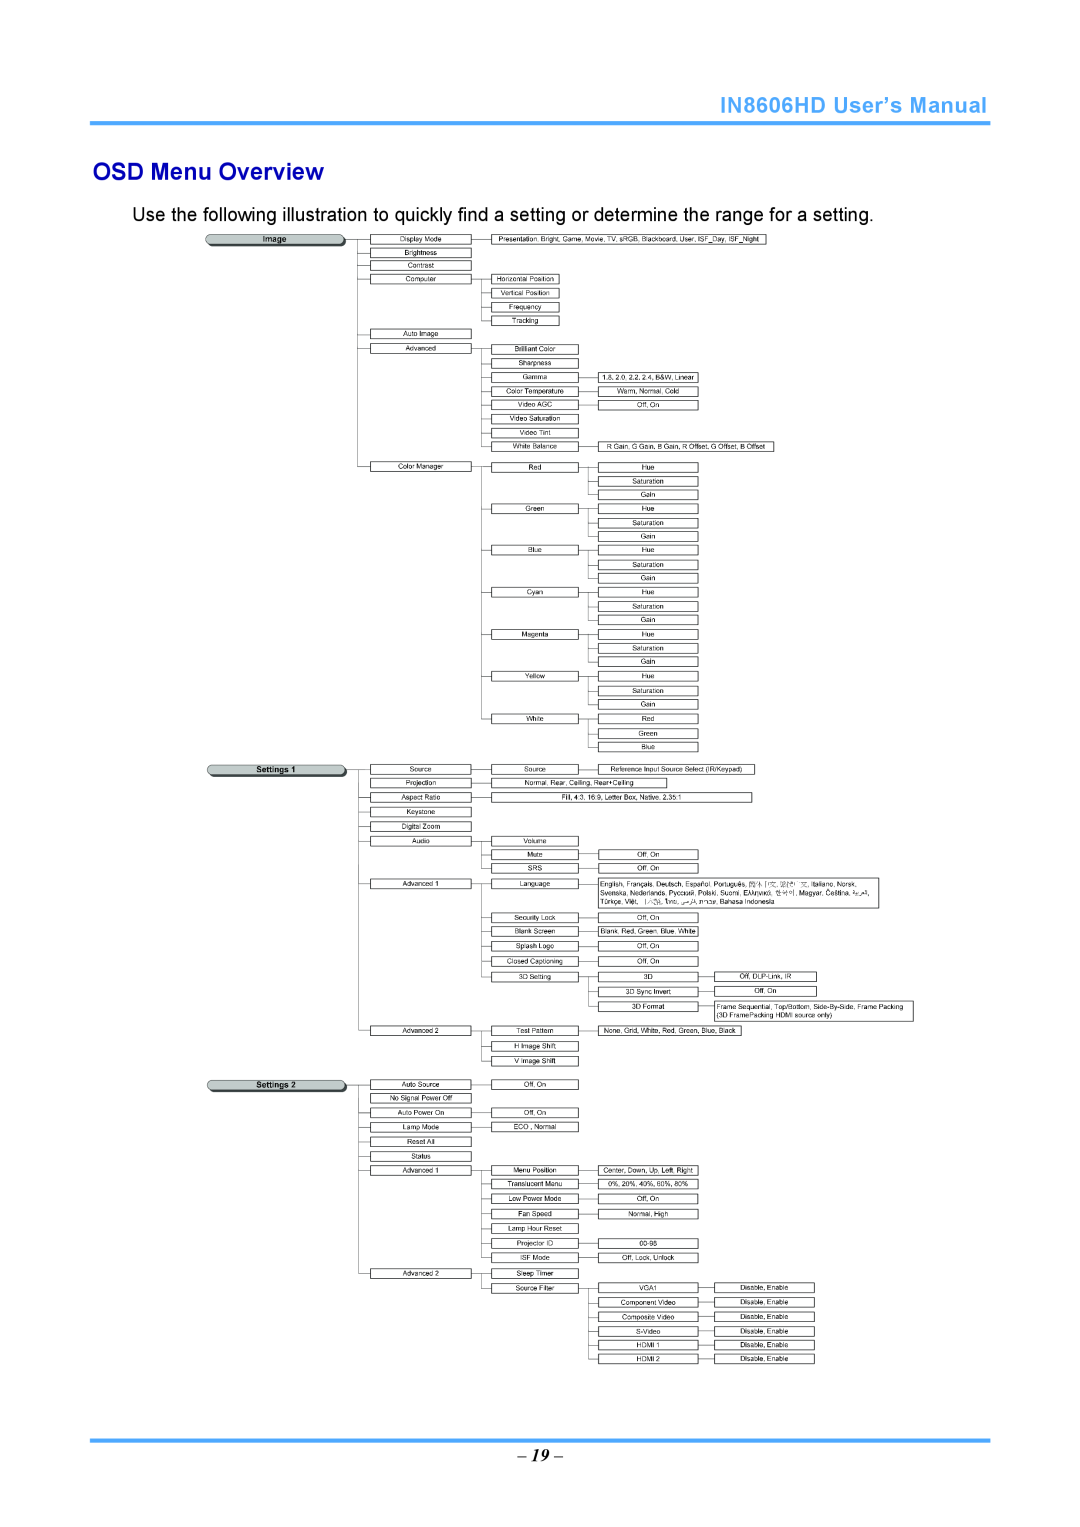 InFocus IN8606HD manual OSD Menu Overview 